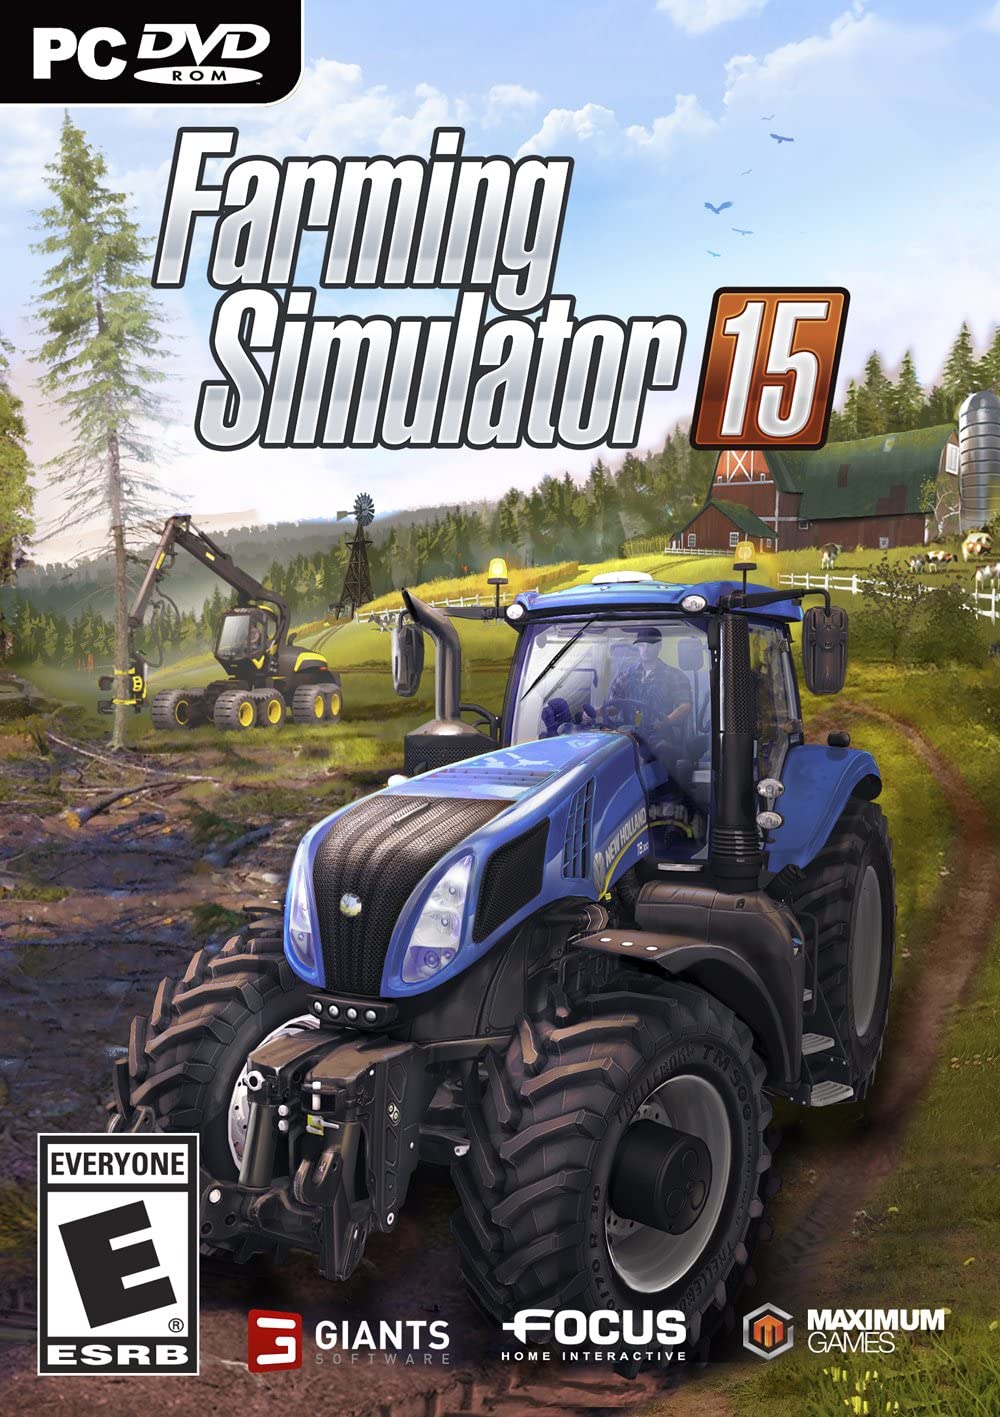 cd key farming simulator 2019